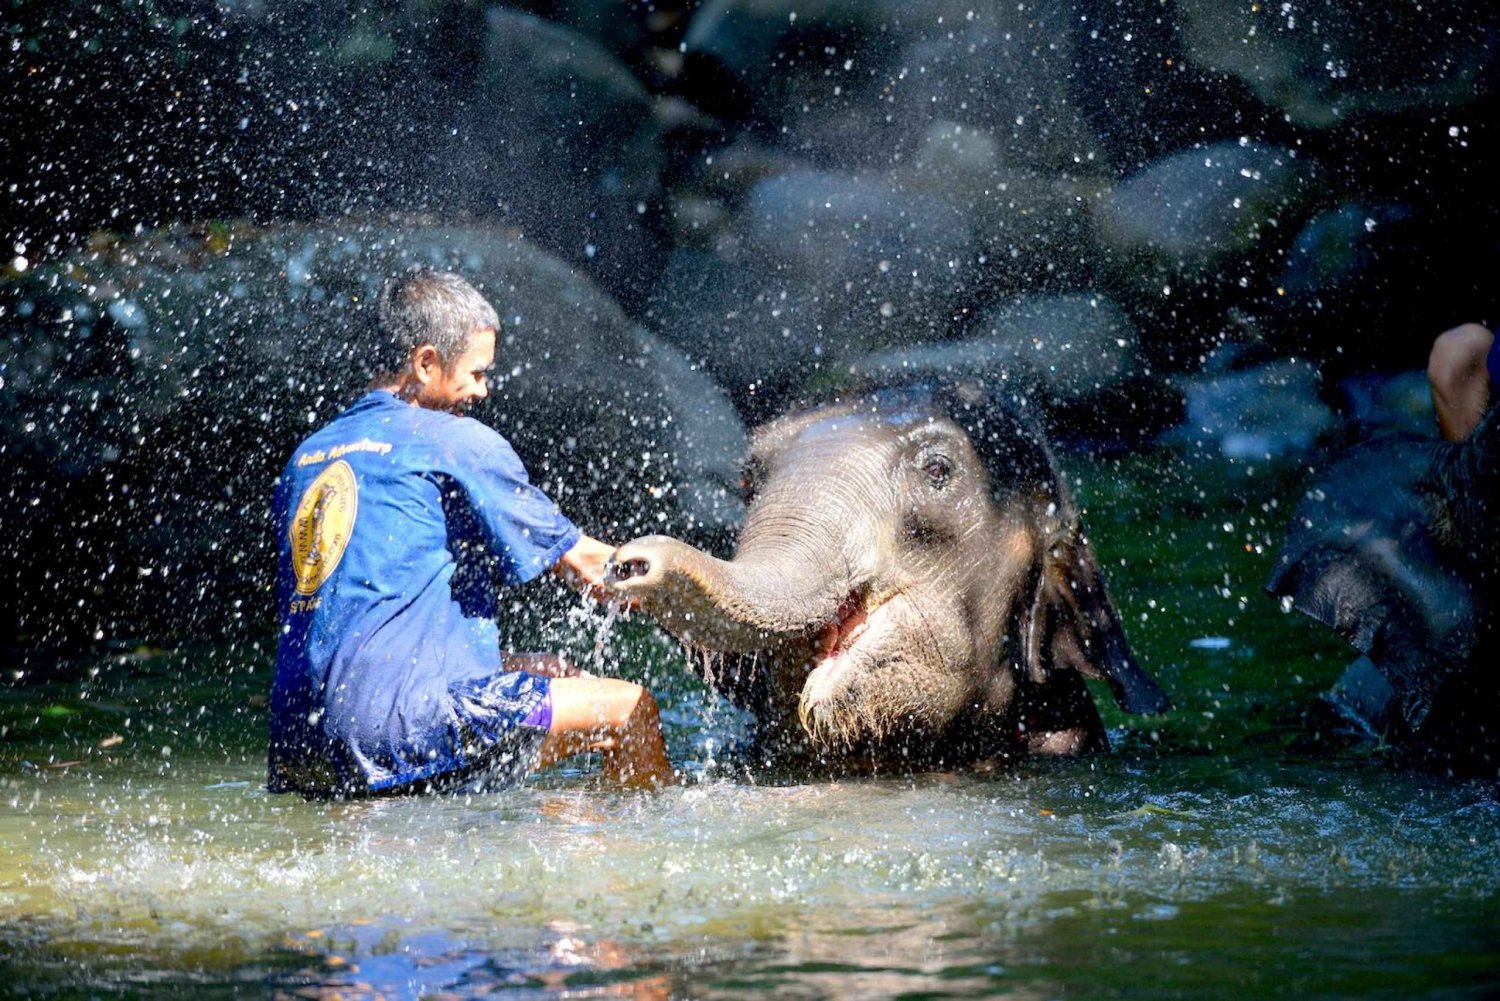 From Phuket & Khao Lak: Elephant Care with Waterfall Visit